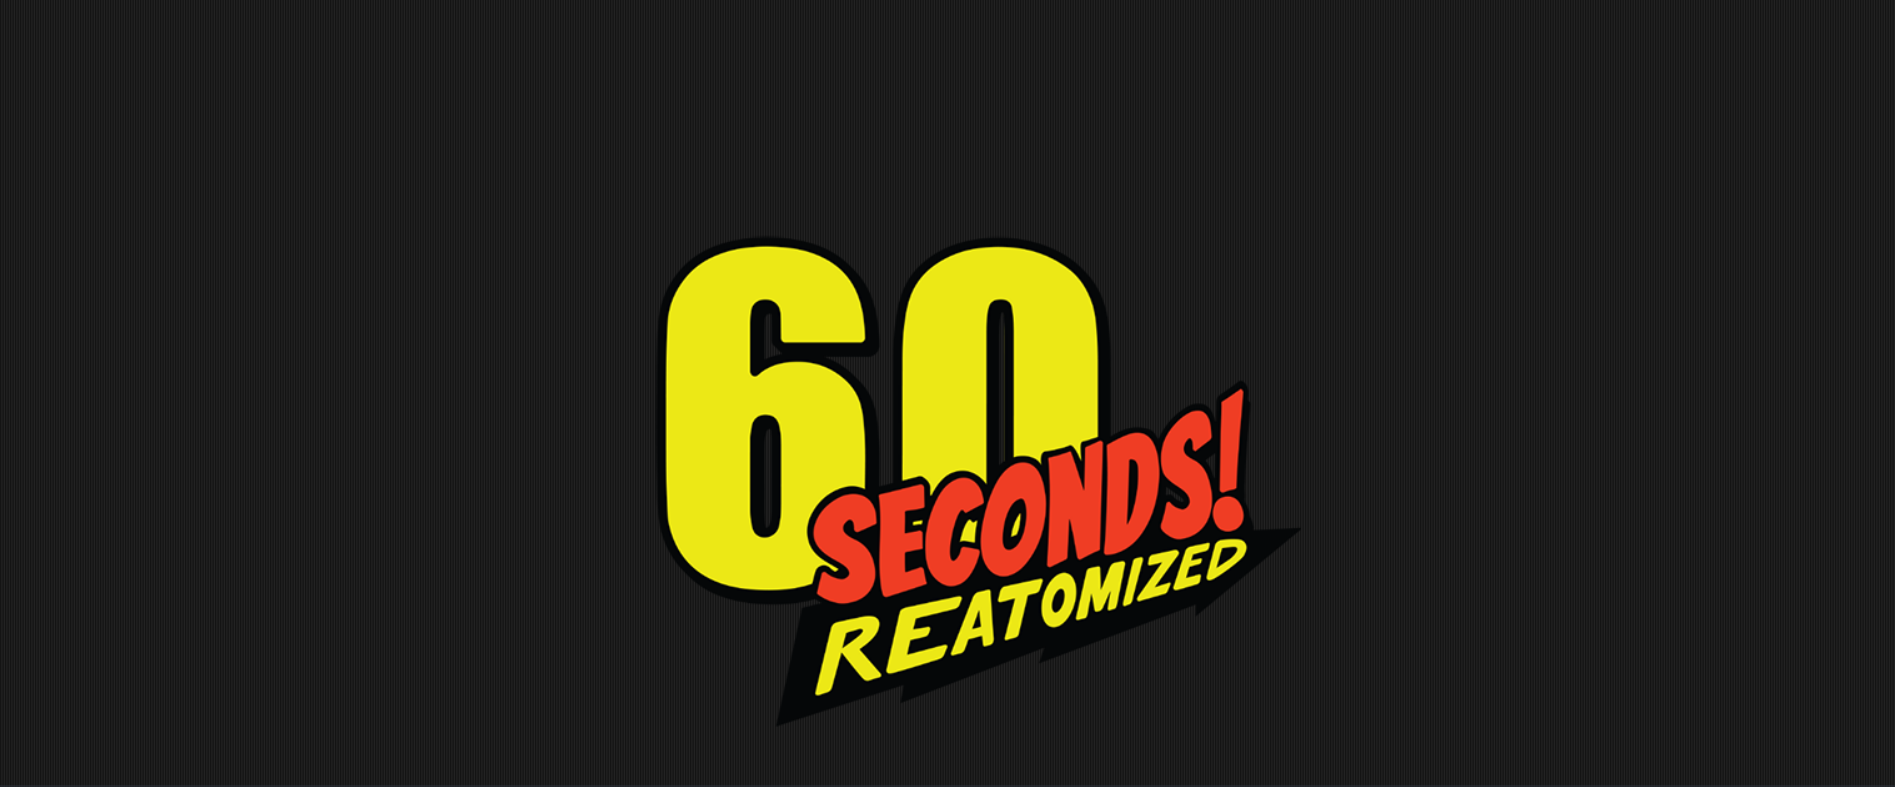 60 Seconds 